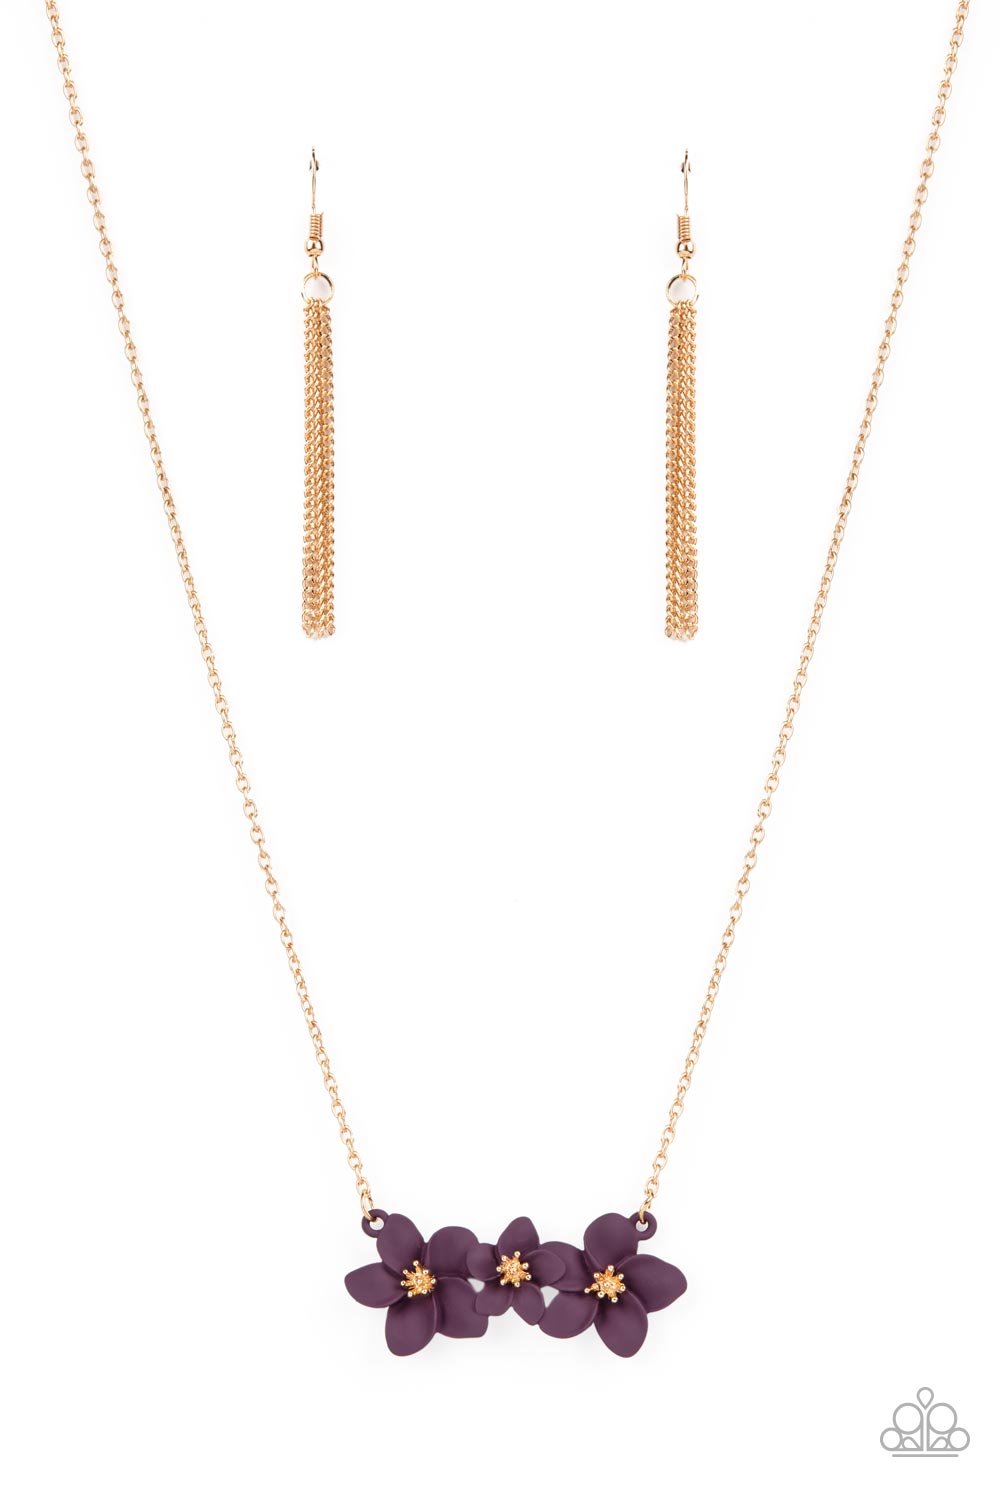 Paparazzi Accessories - Paparazzi Accessories - Petunia Picnic - Purple Necklace. Bling By Titia Boutique